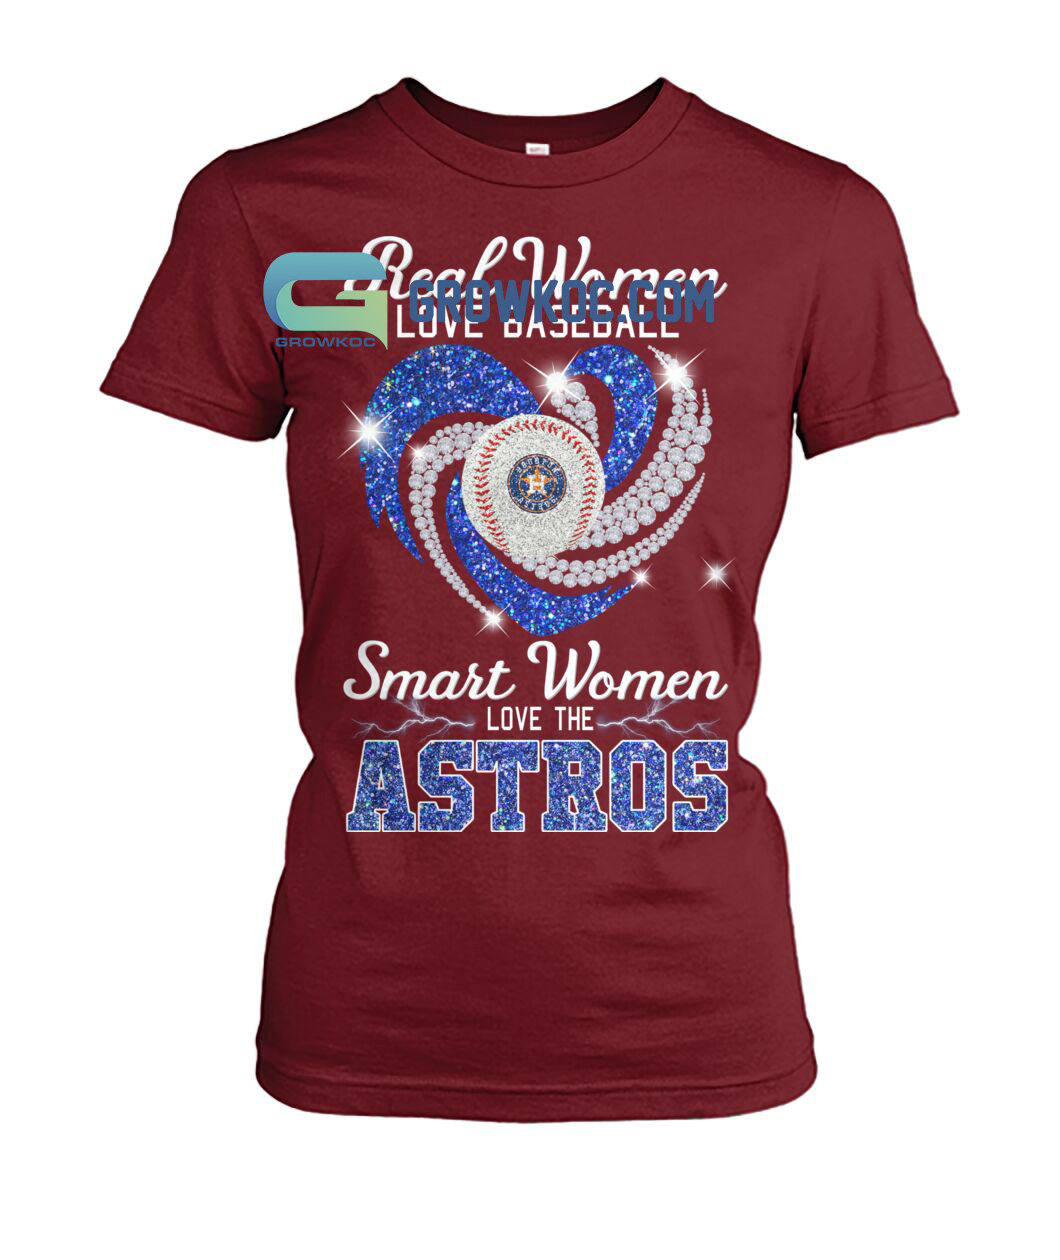 Real Women Love Baseball Smart Women Love The Astros Shirt - High-Quality  Printed Brand